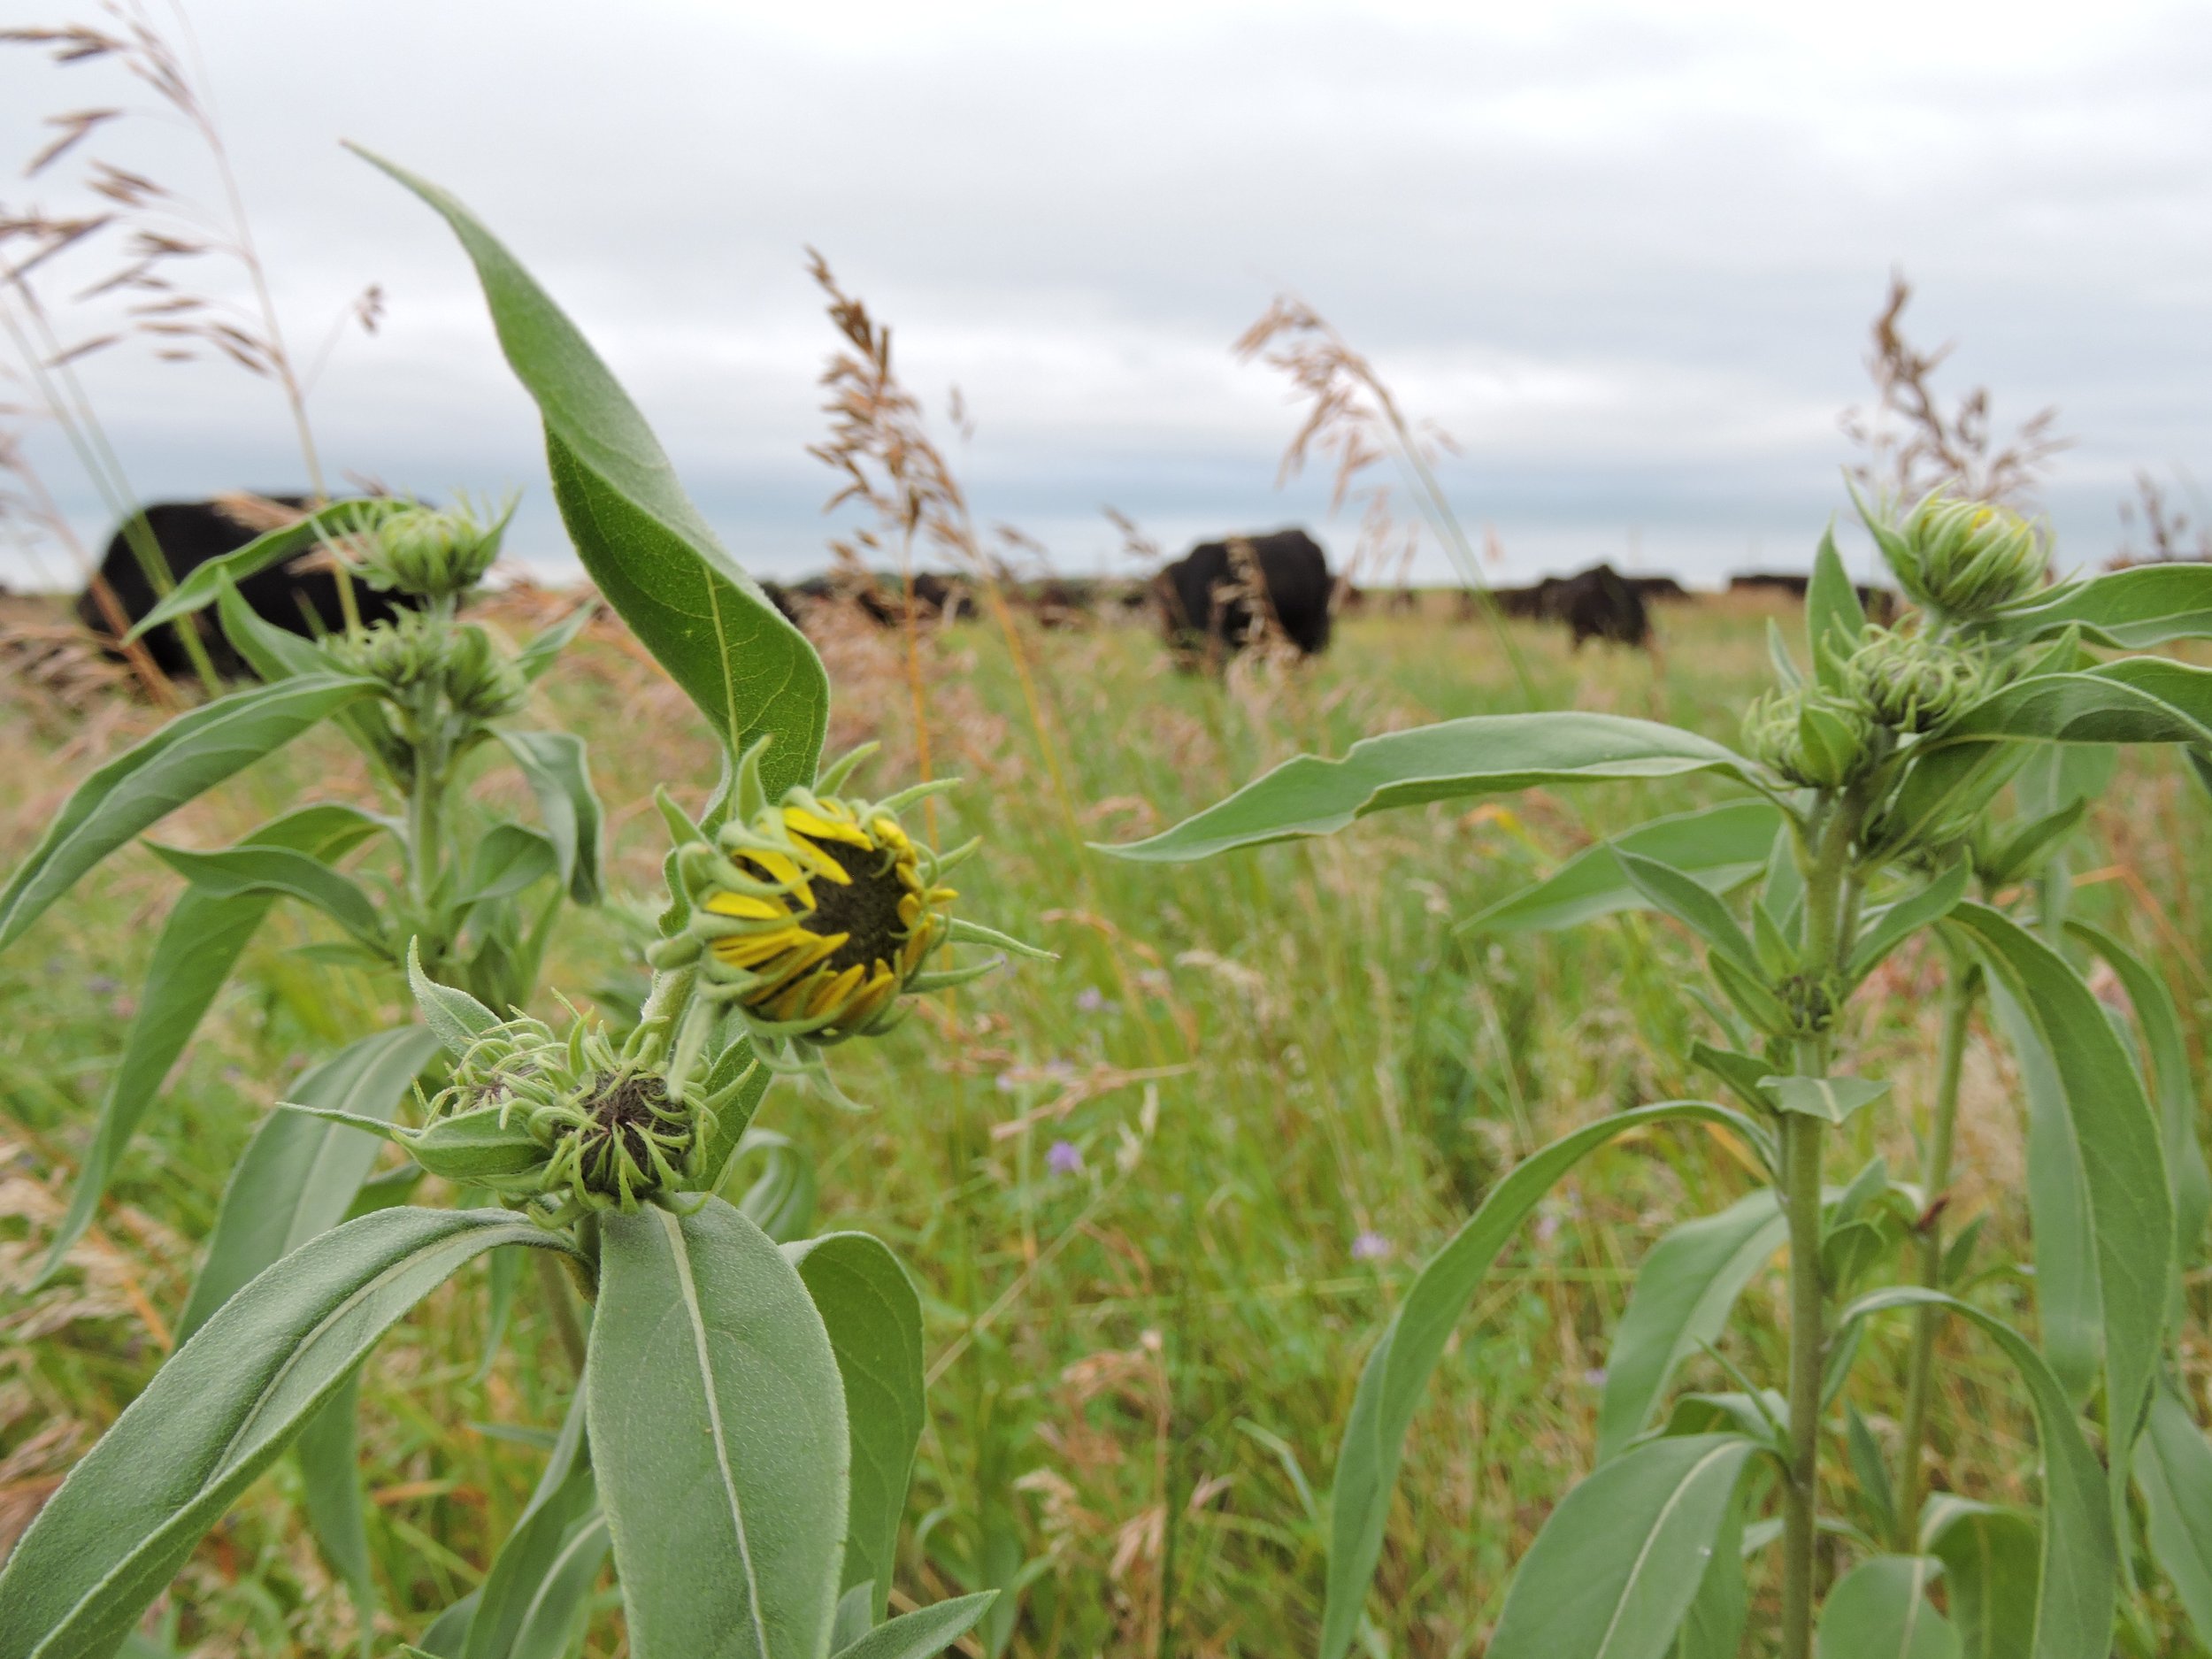 Cattle graze in established pollinator habitat